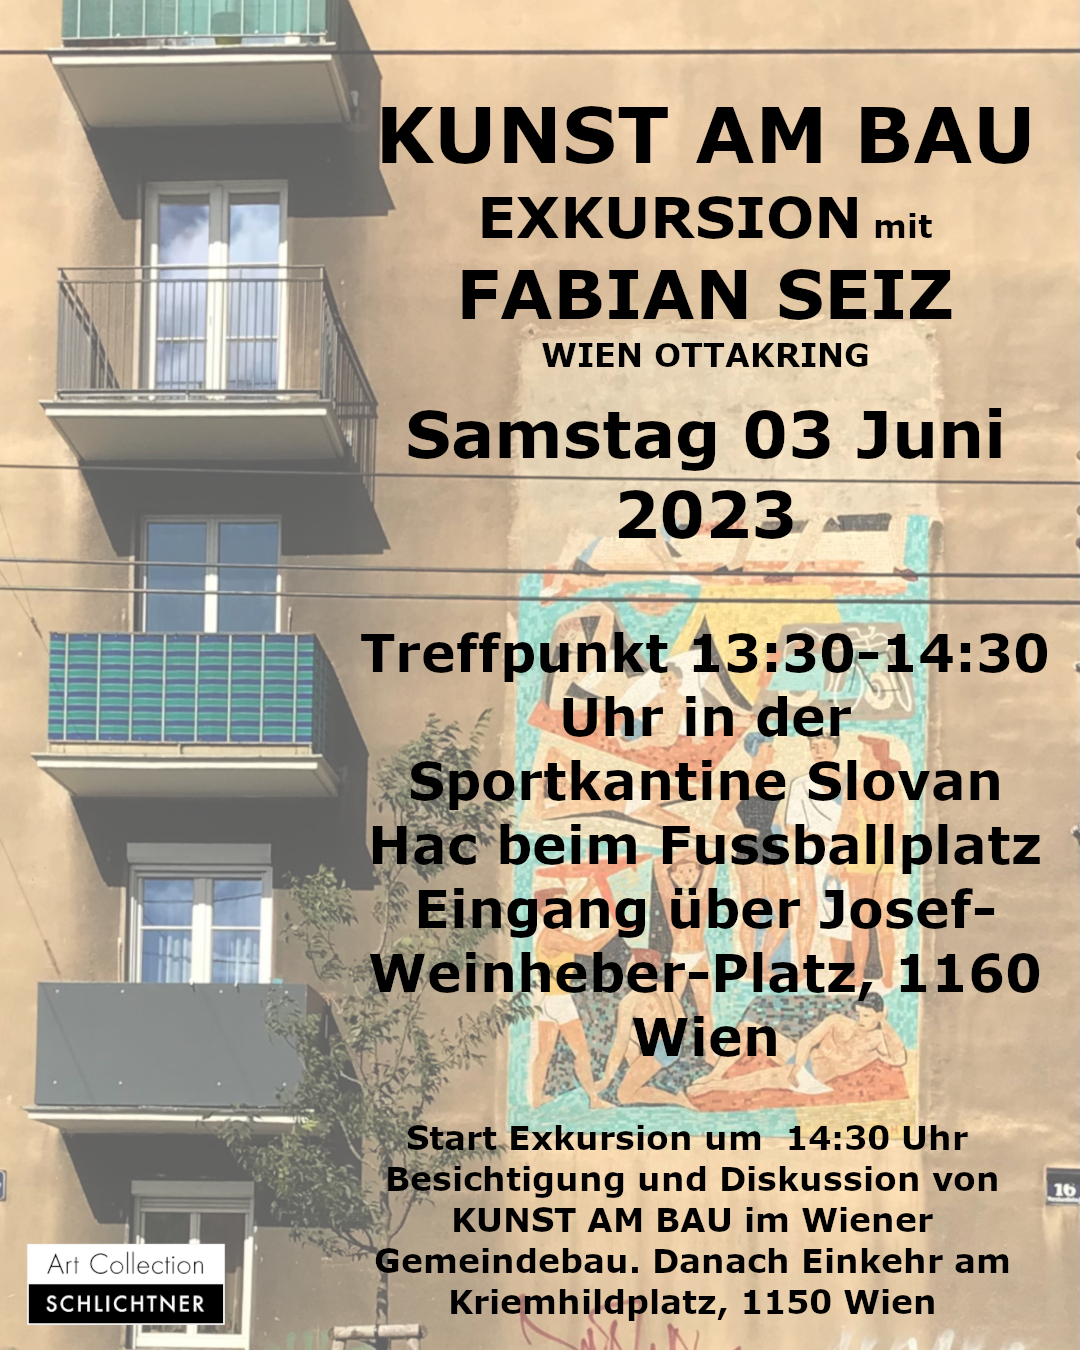 KUNST AM BAU (percent for art) excursion with FABIAN SEIZ, Wien Ottakring, Saturday 03. June 2023